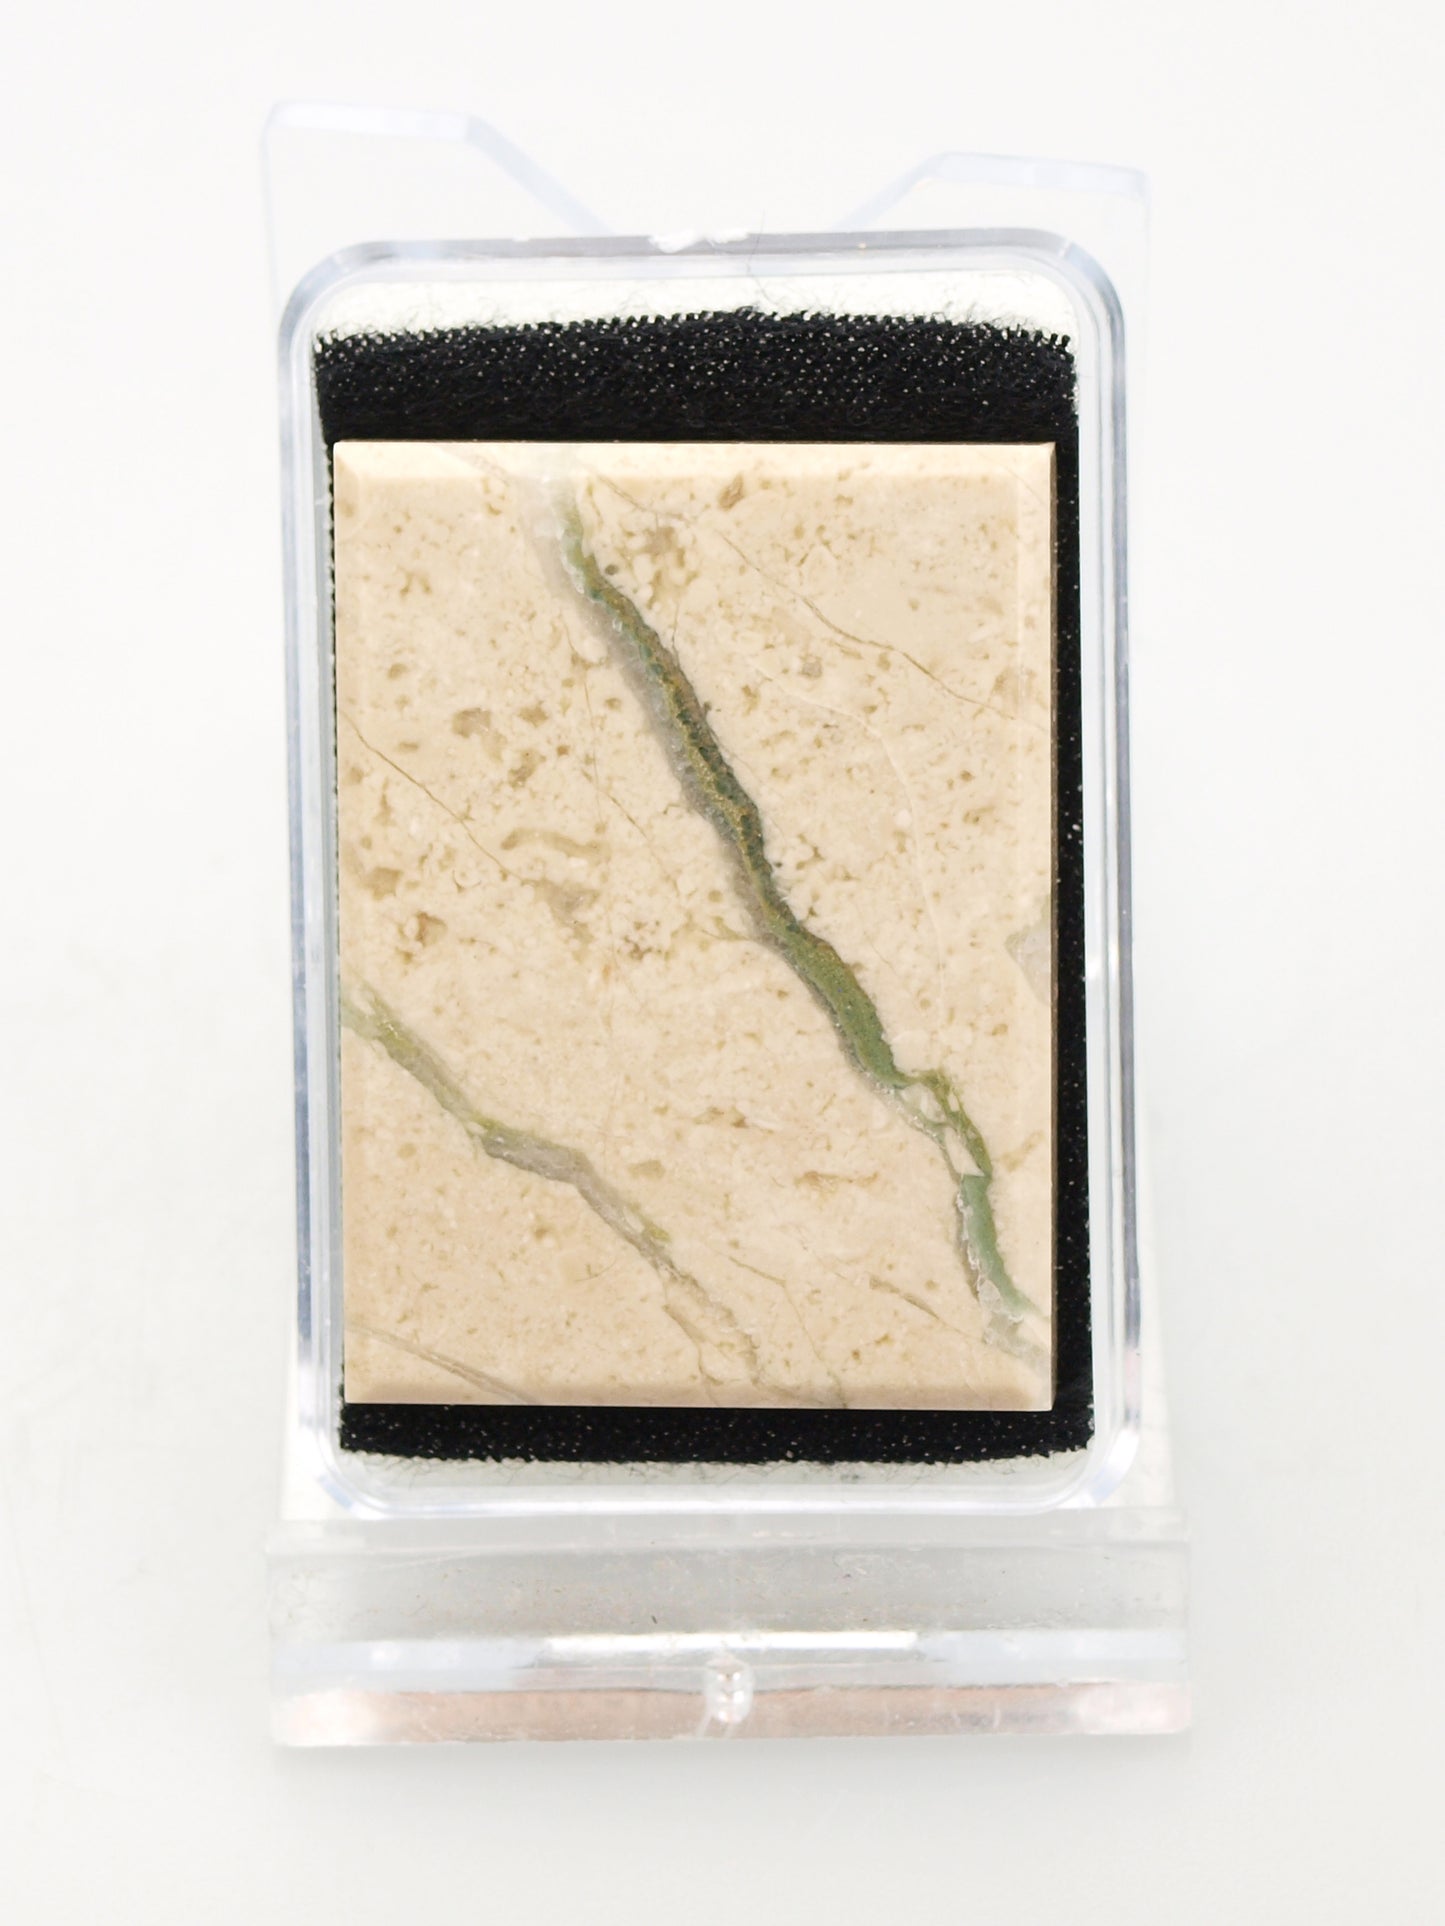 Jurassic limestone tabular with fossils, Mikulov